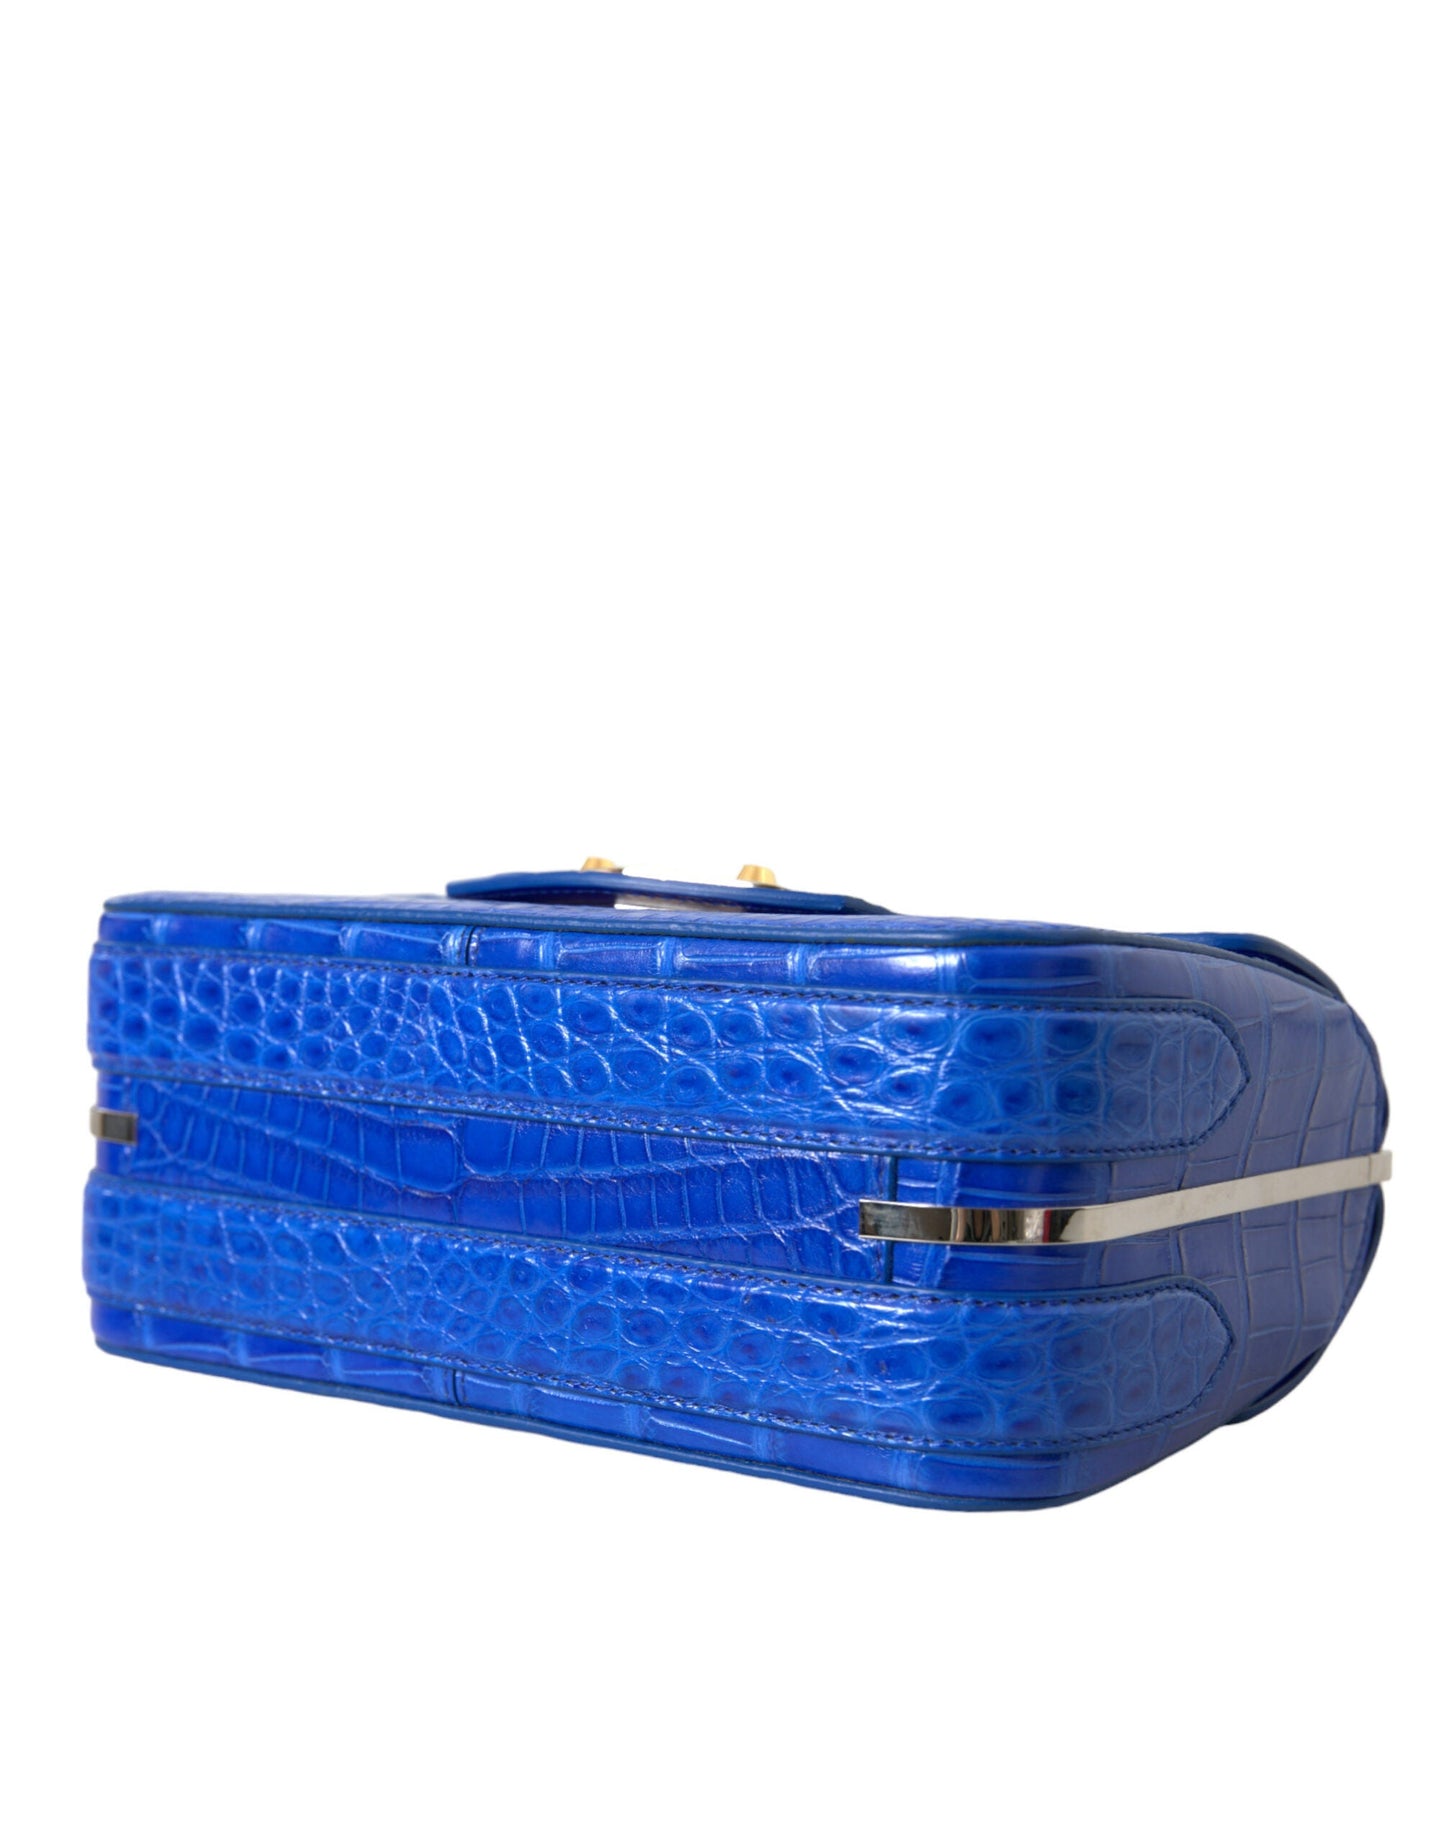 Balenciaga Alligator Skin Mini Shoulder Bag - Elegant Blue | Fashionsarah.com